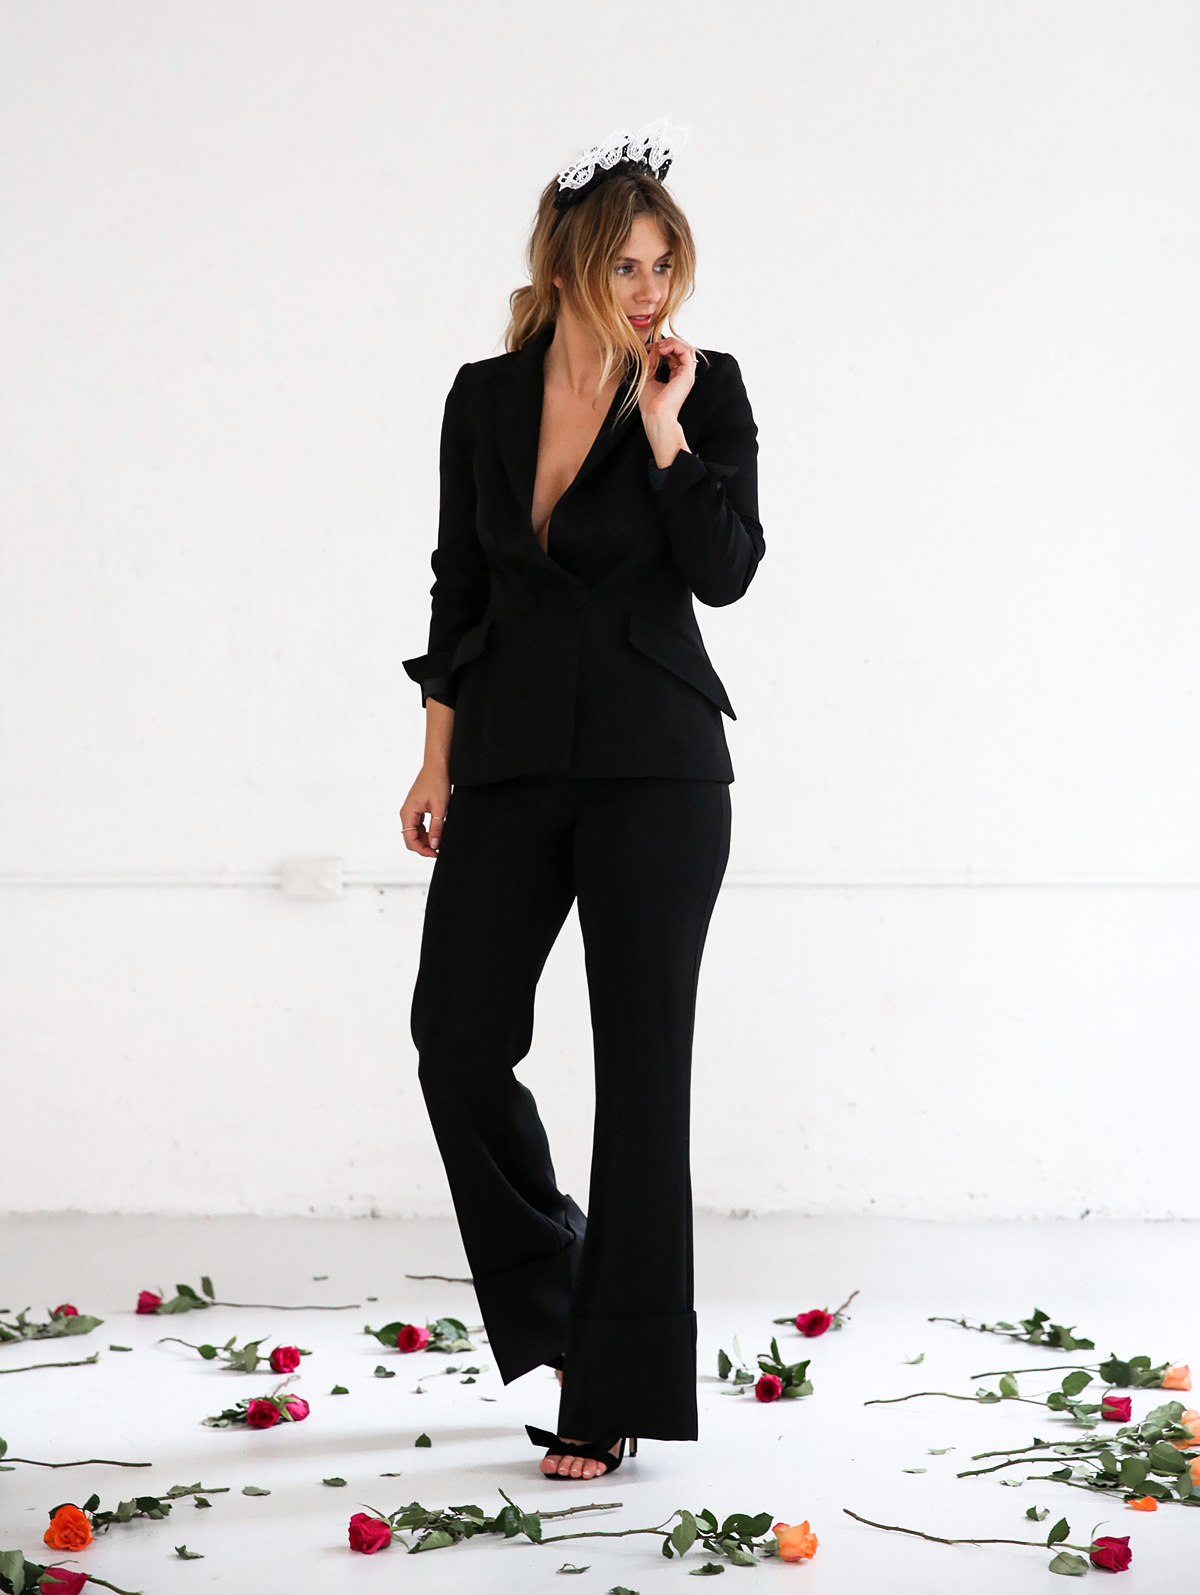 Fashion blogger Lisa Hamilton styling a black tuxedo for Derby Day 